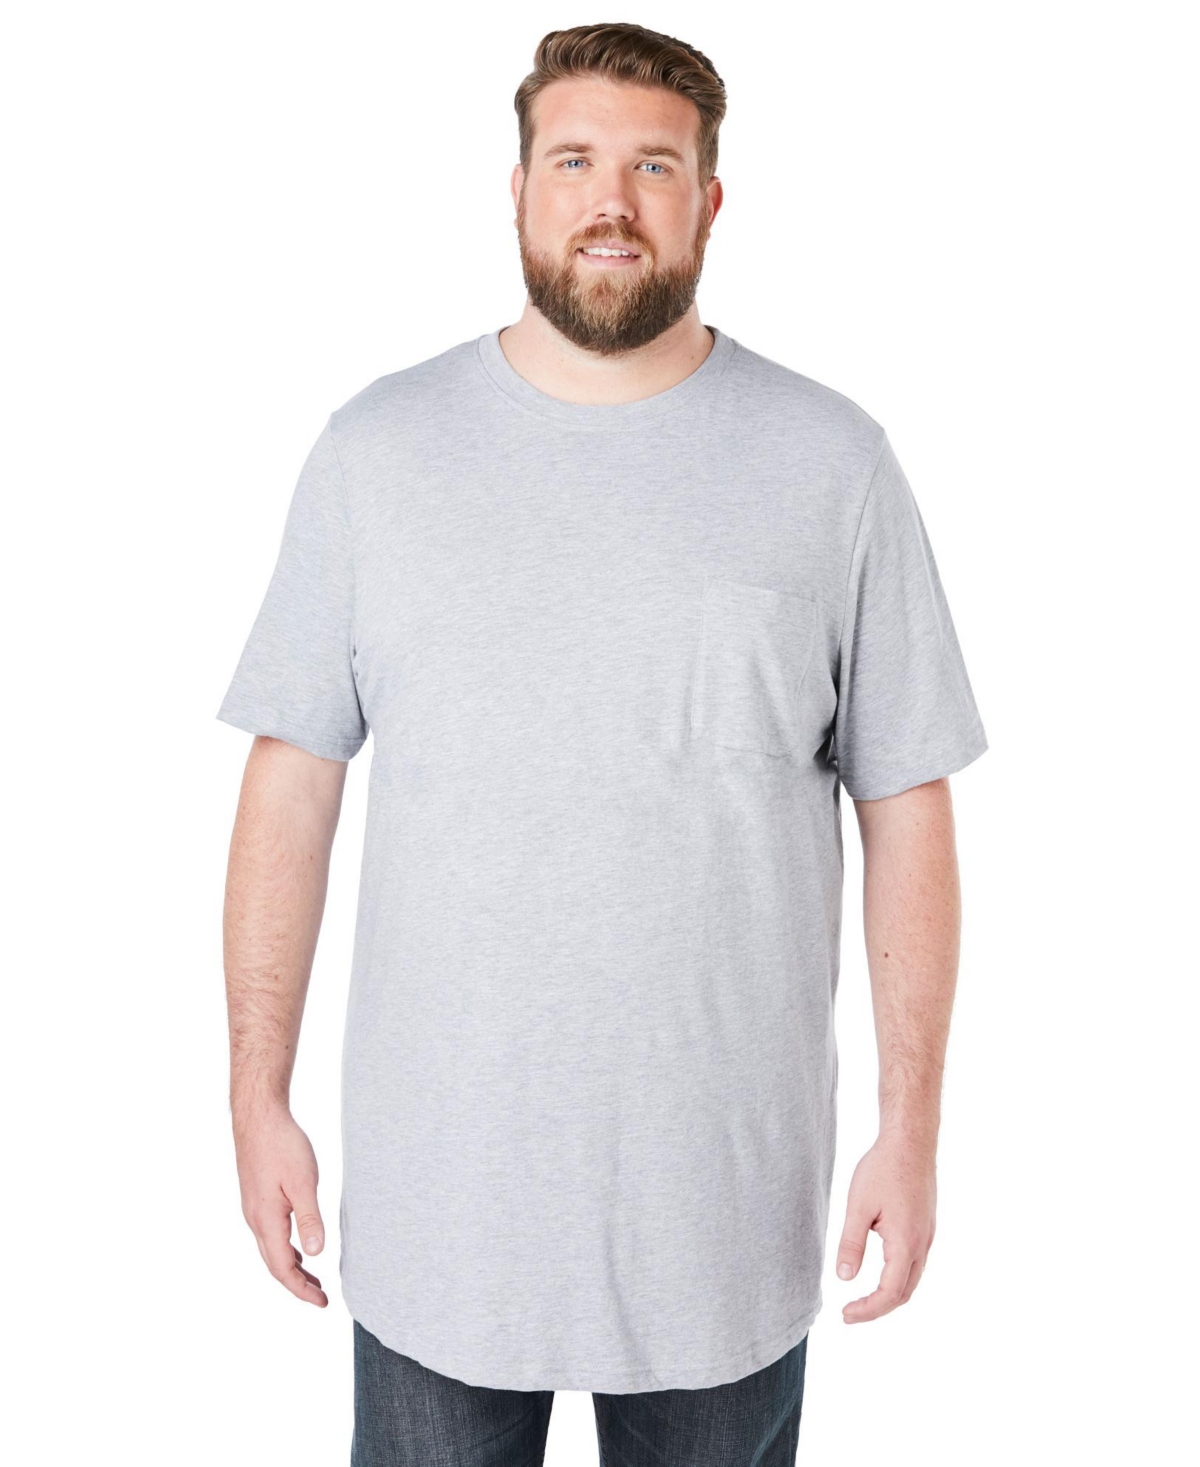 Big & Tall Shrink-Less Lightweight Longer-Length Crewneck Pocket T-Shirt - Heather grey